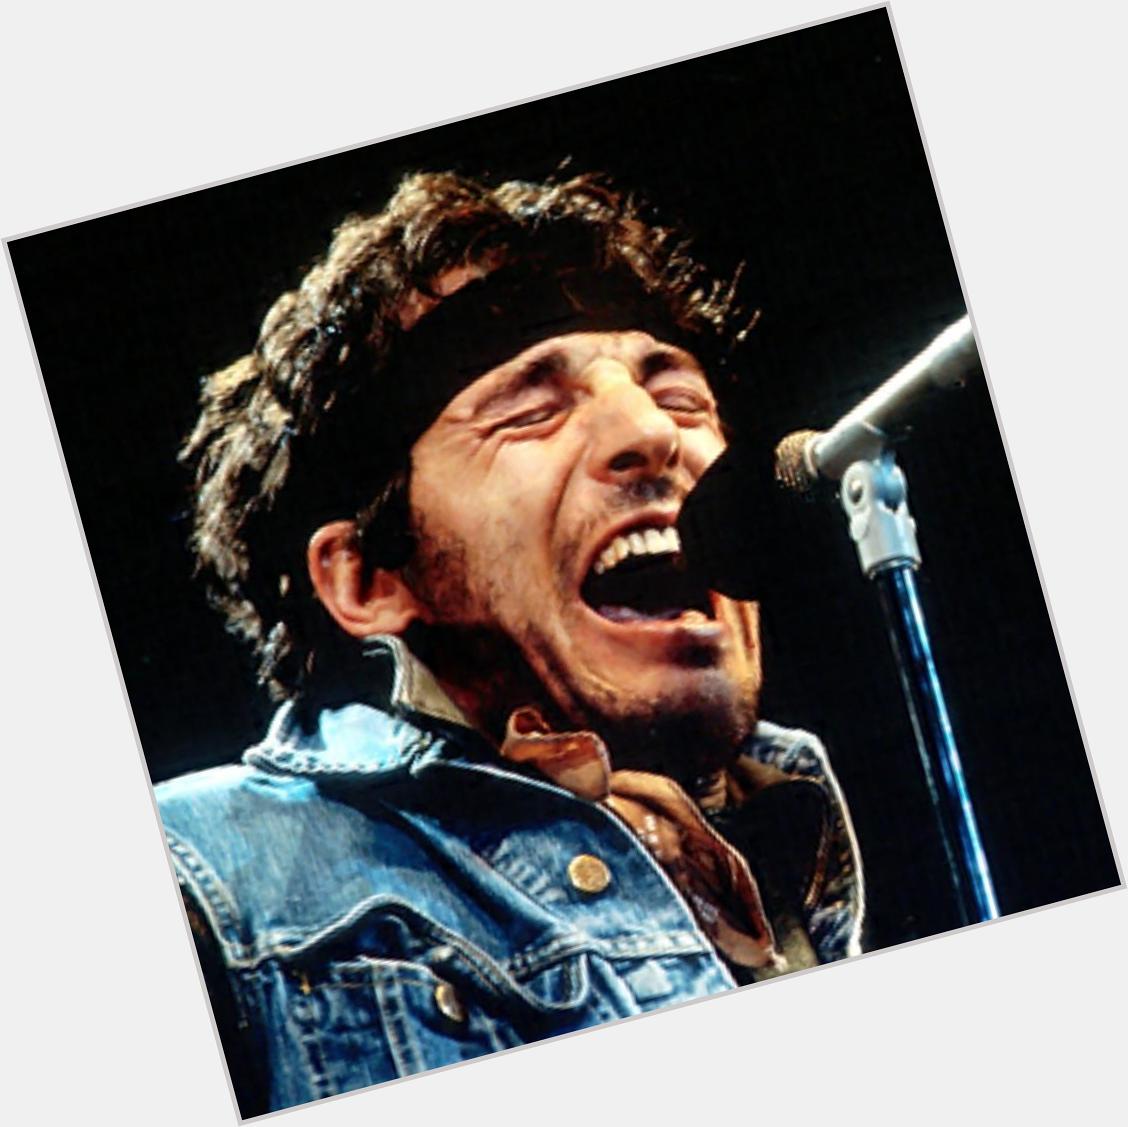 Happy birthday Bruce Springsteen - 66 today.    